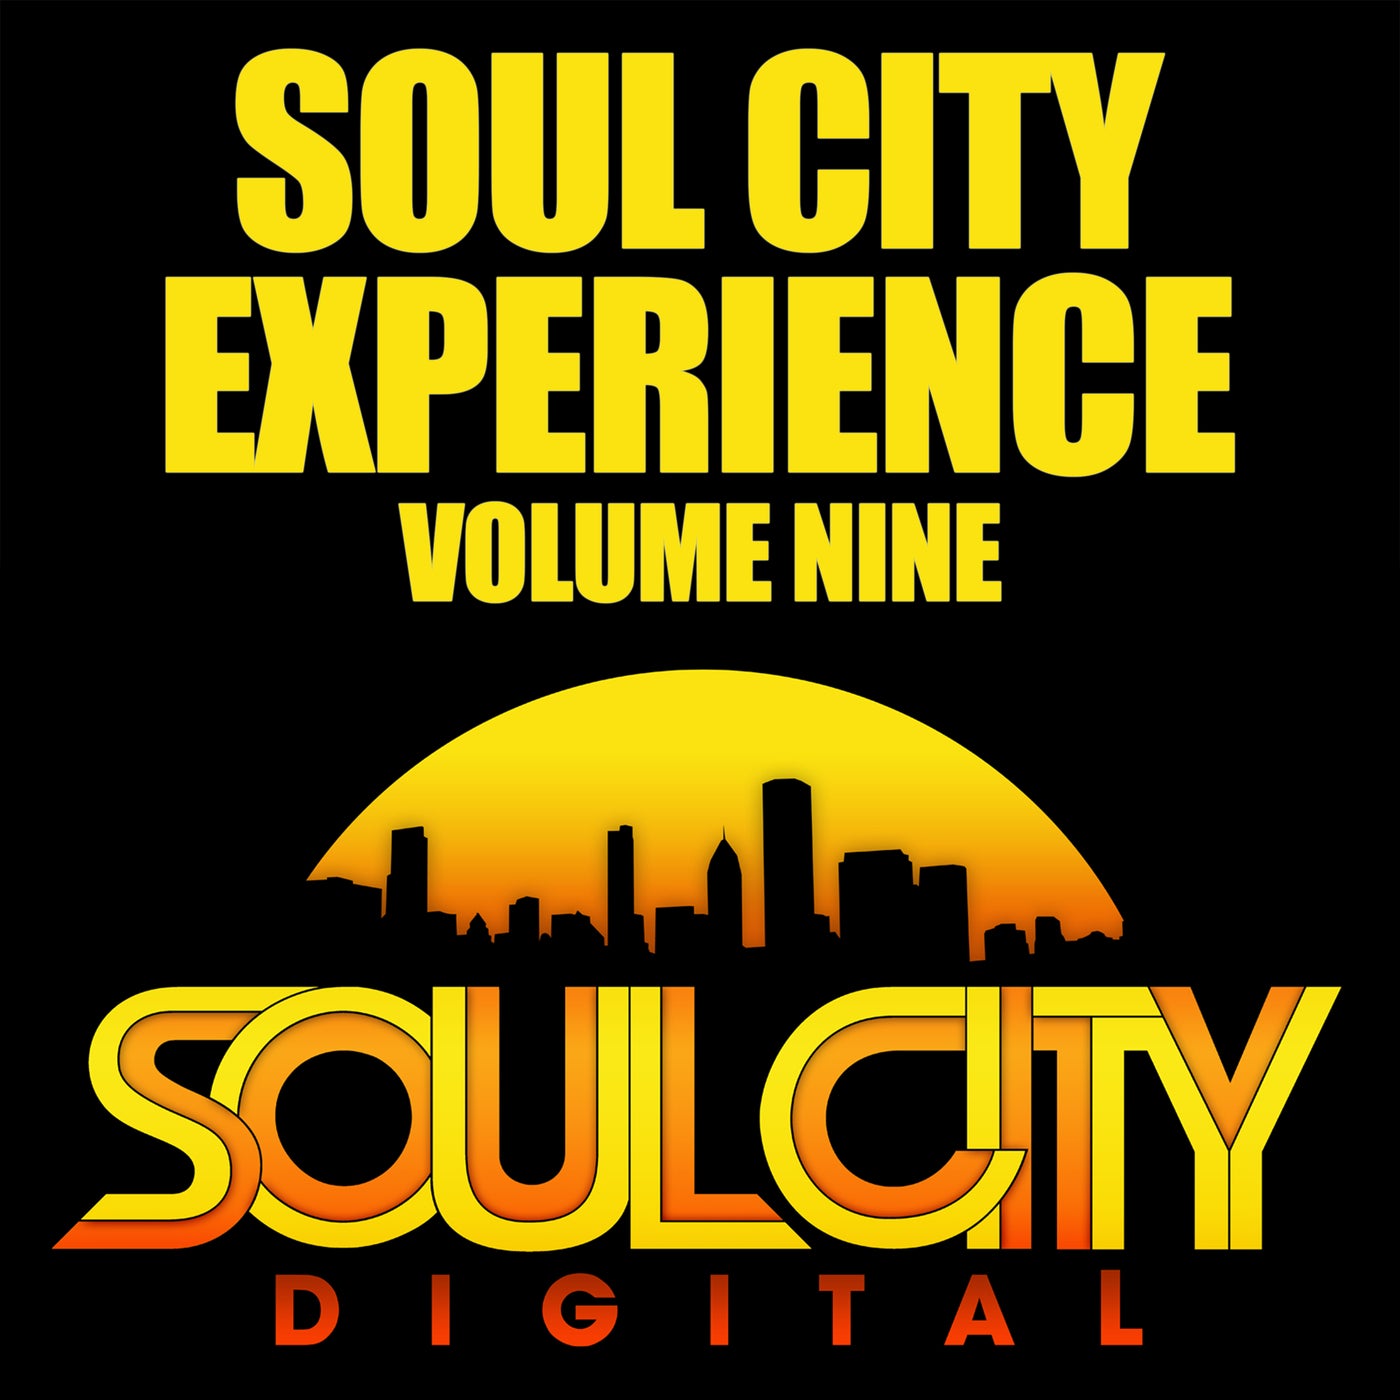 Soul City Experience, Vol. 9